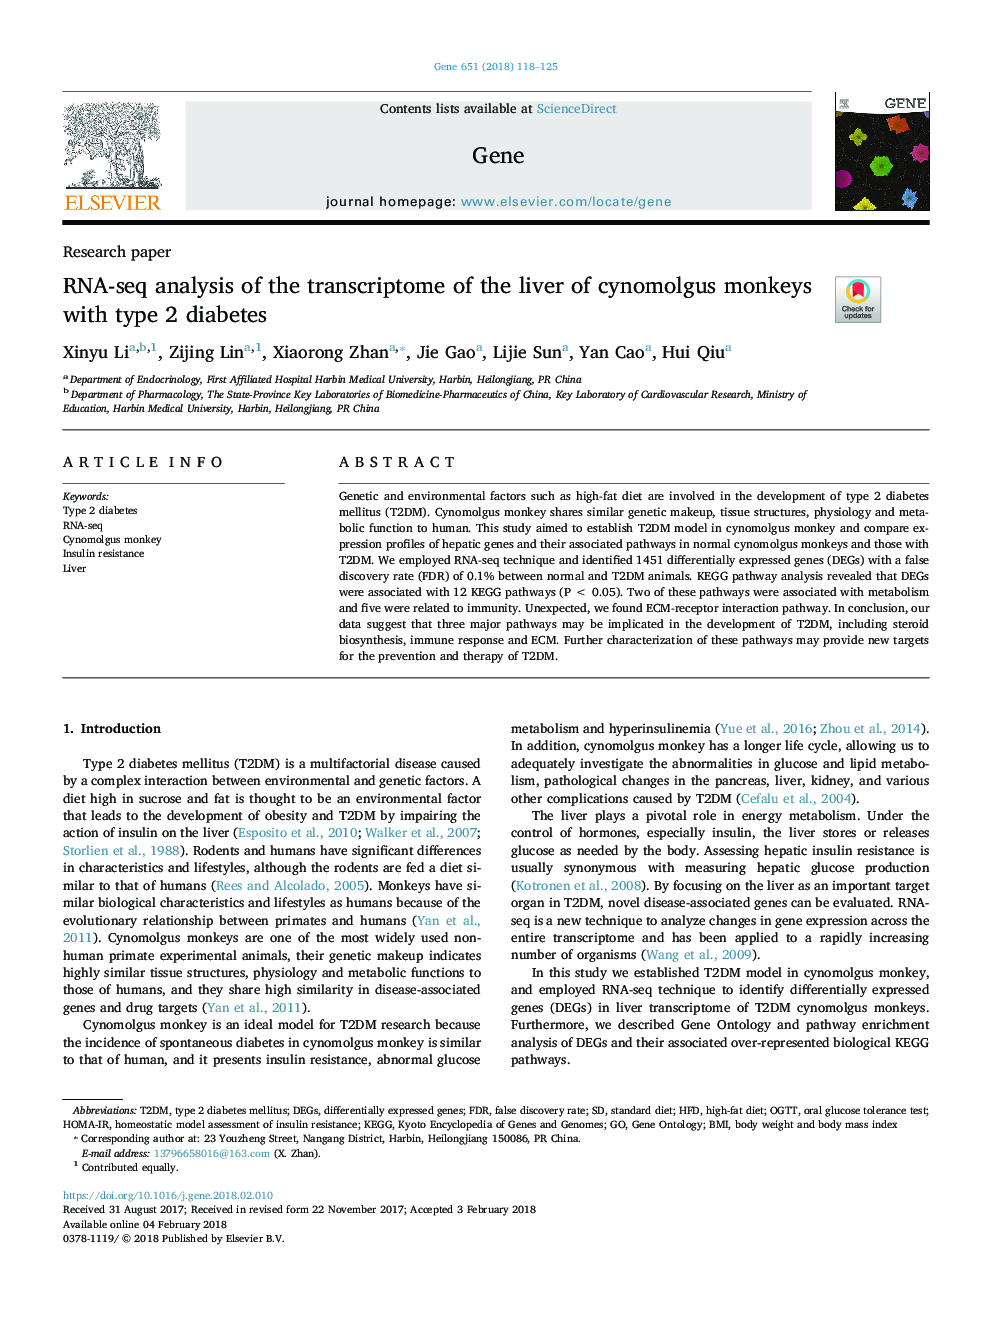 RNA-seq analysis of the transcriptome of the liver of cynomolgus monkeys with type 2 diabetes